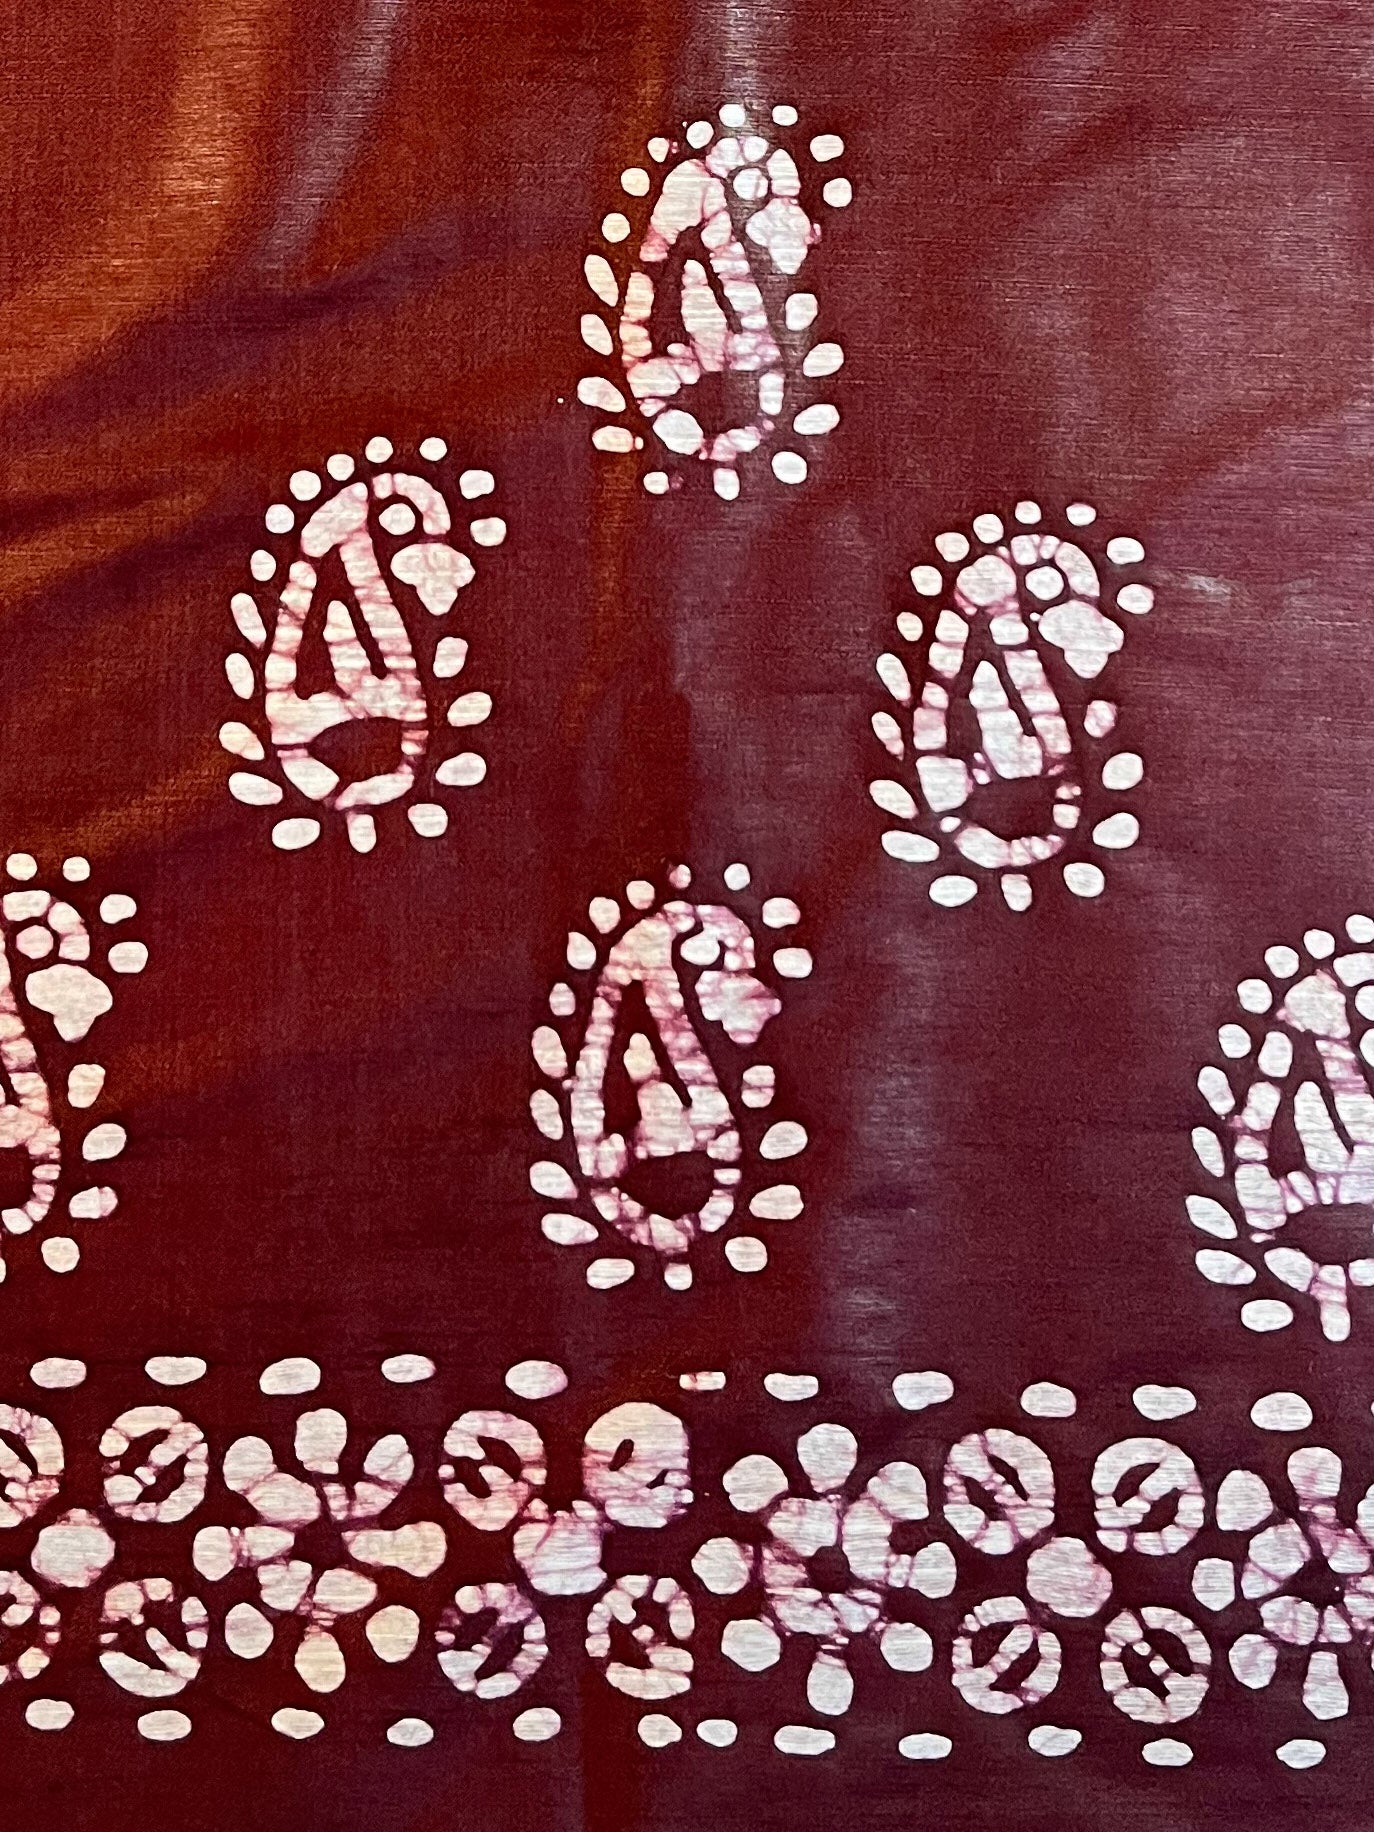 Handloom Khadi Cotton Hand-Dyed Batik Pattern Salwar Kameez Dupatta Set-Orange & Maroon